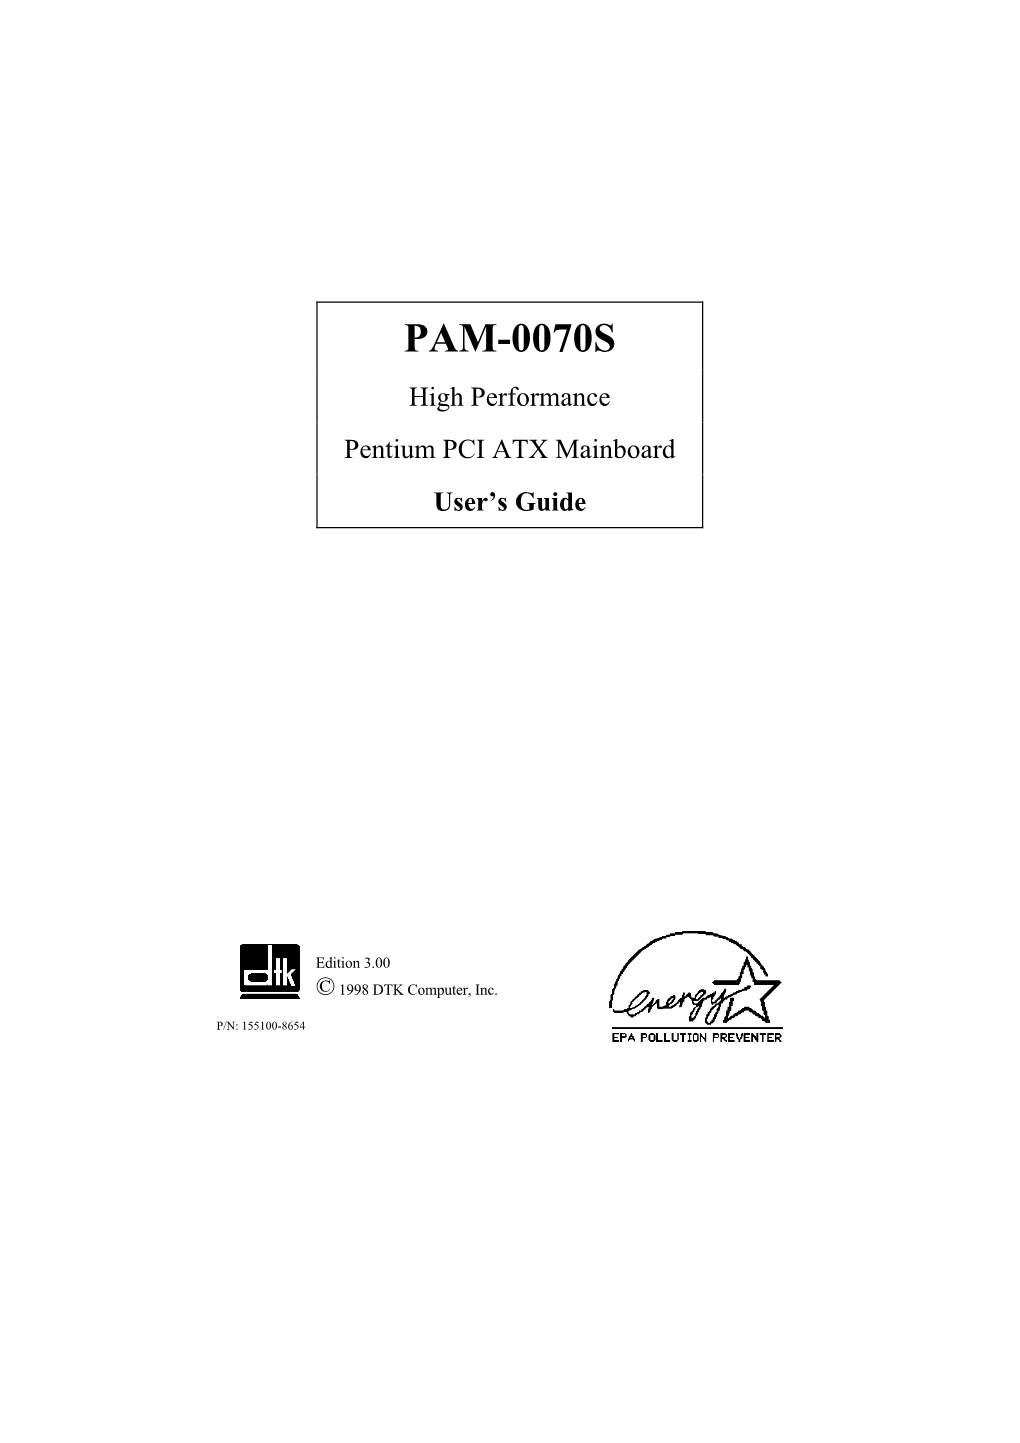 PAM-0070S E1 User Manual 3.00